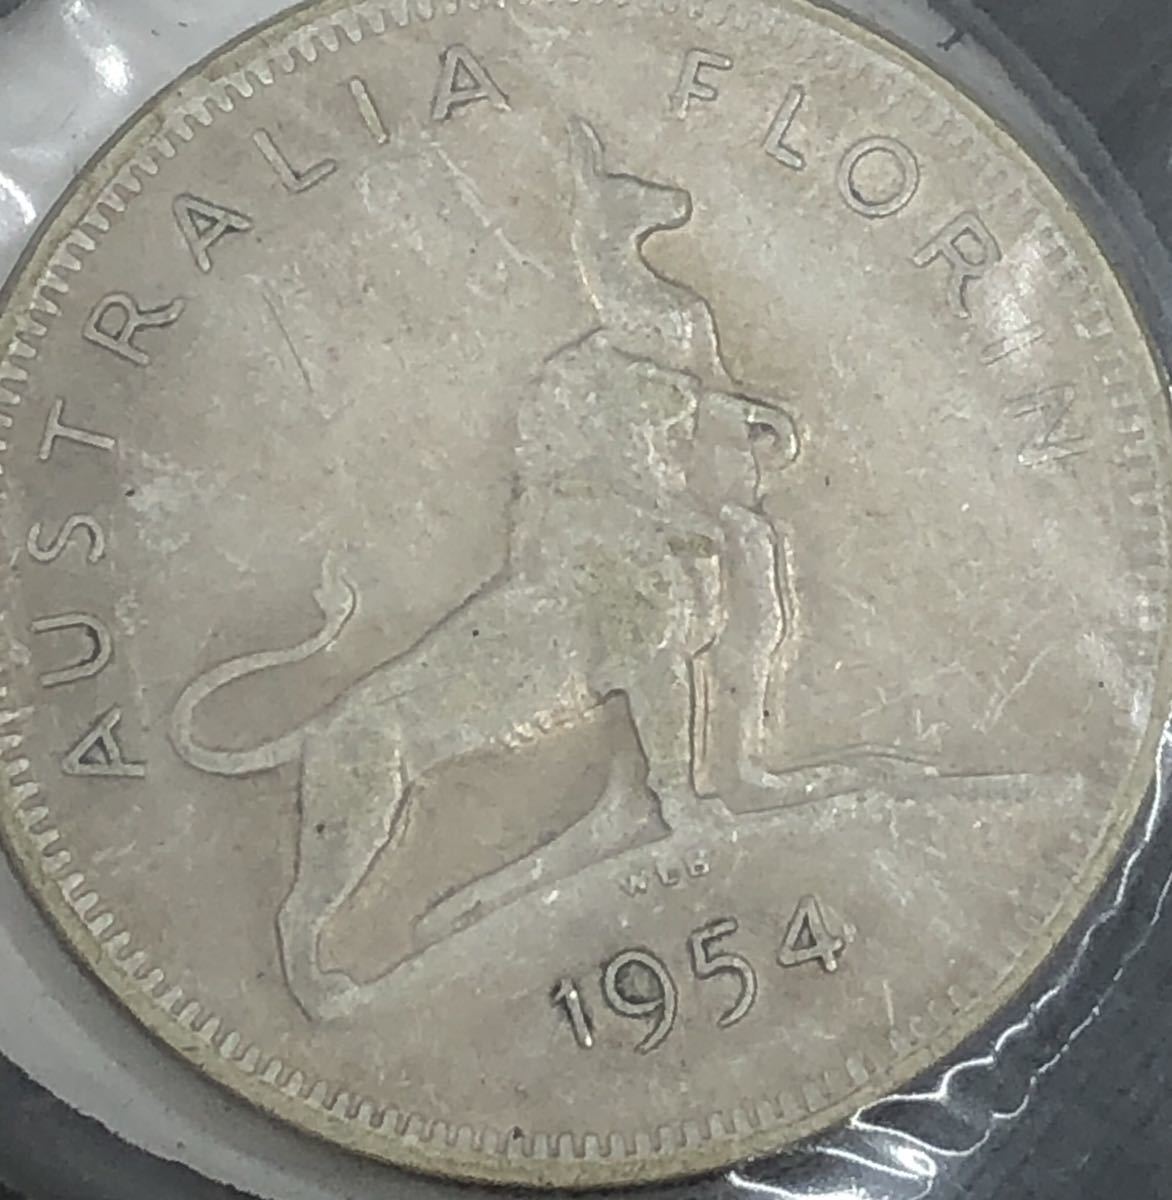 Ｙ9148【オーストラリア】 フローリン 銀貨 1954年 カンガルー 獅子 ライオン 説明書 認定書付きの画像1